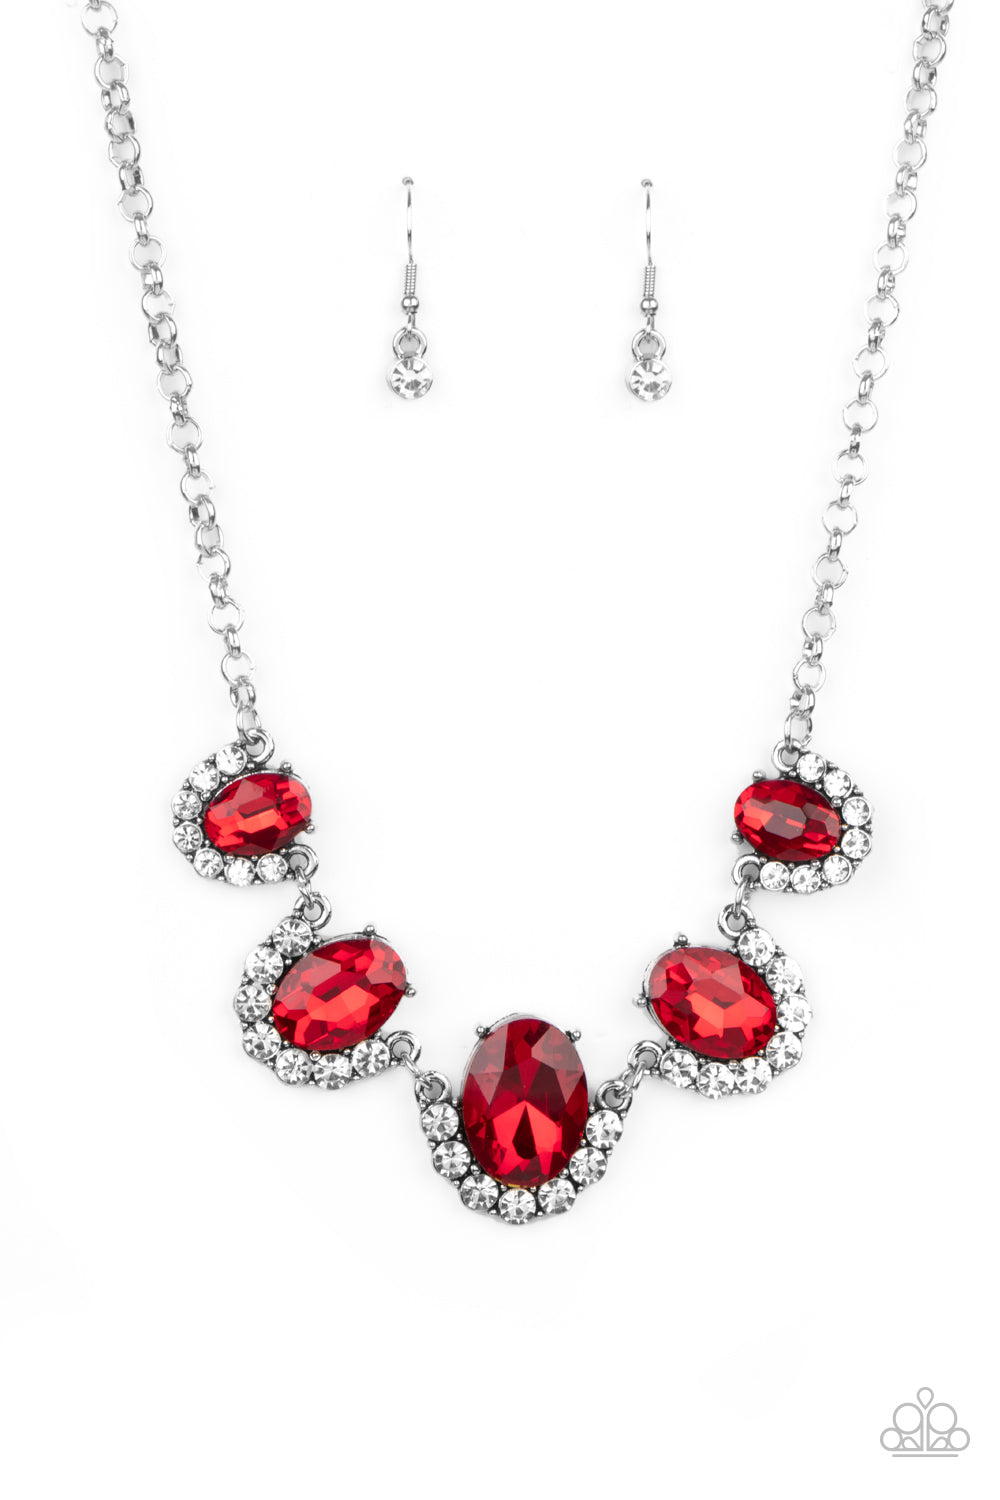 five-dollar-jewelry-the-queen-demands-it-red-paparazzi-accessories